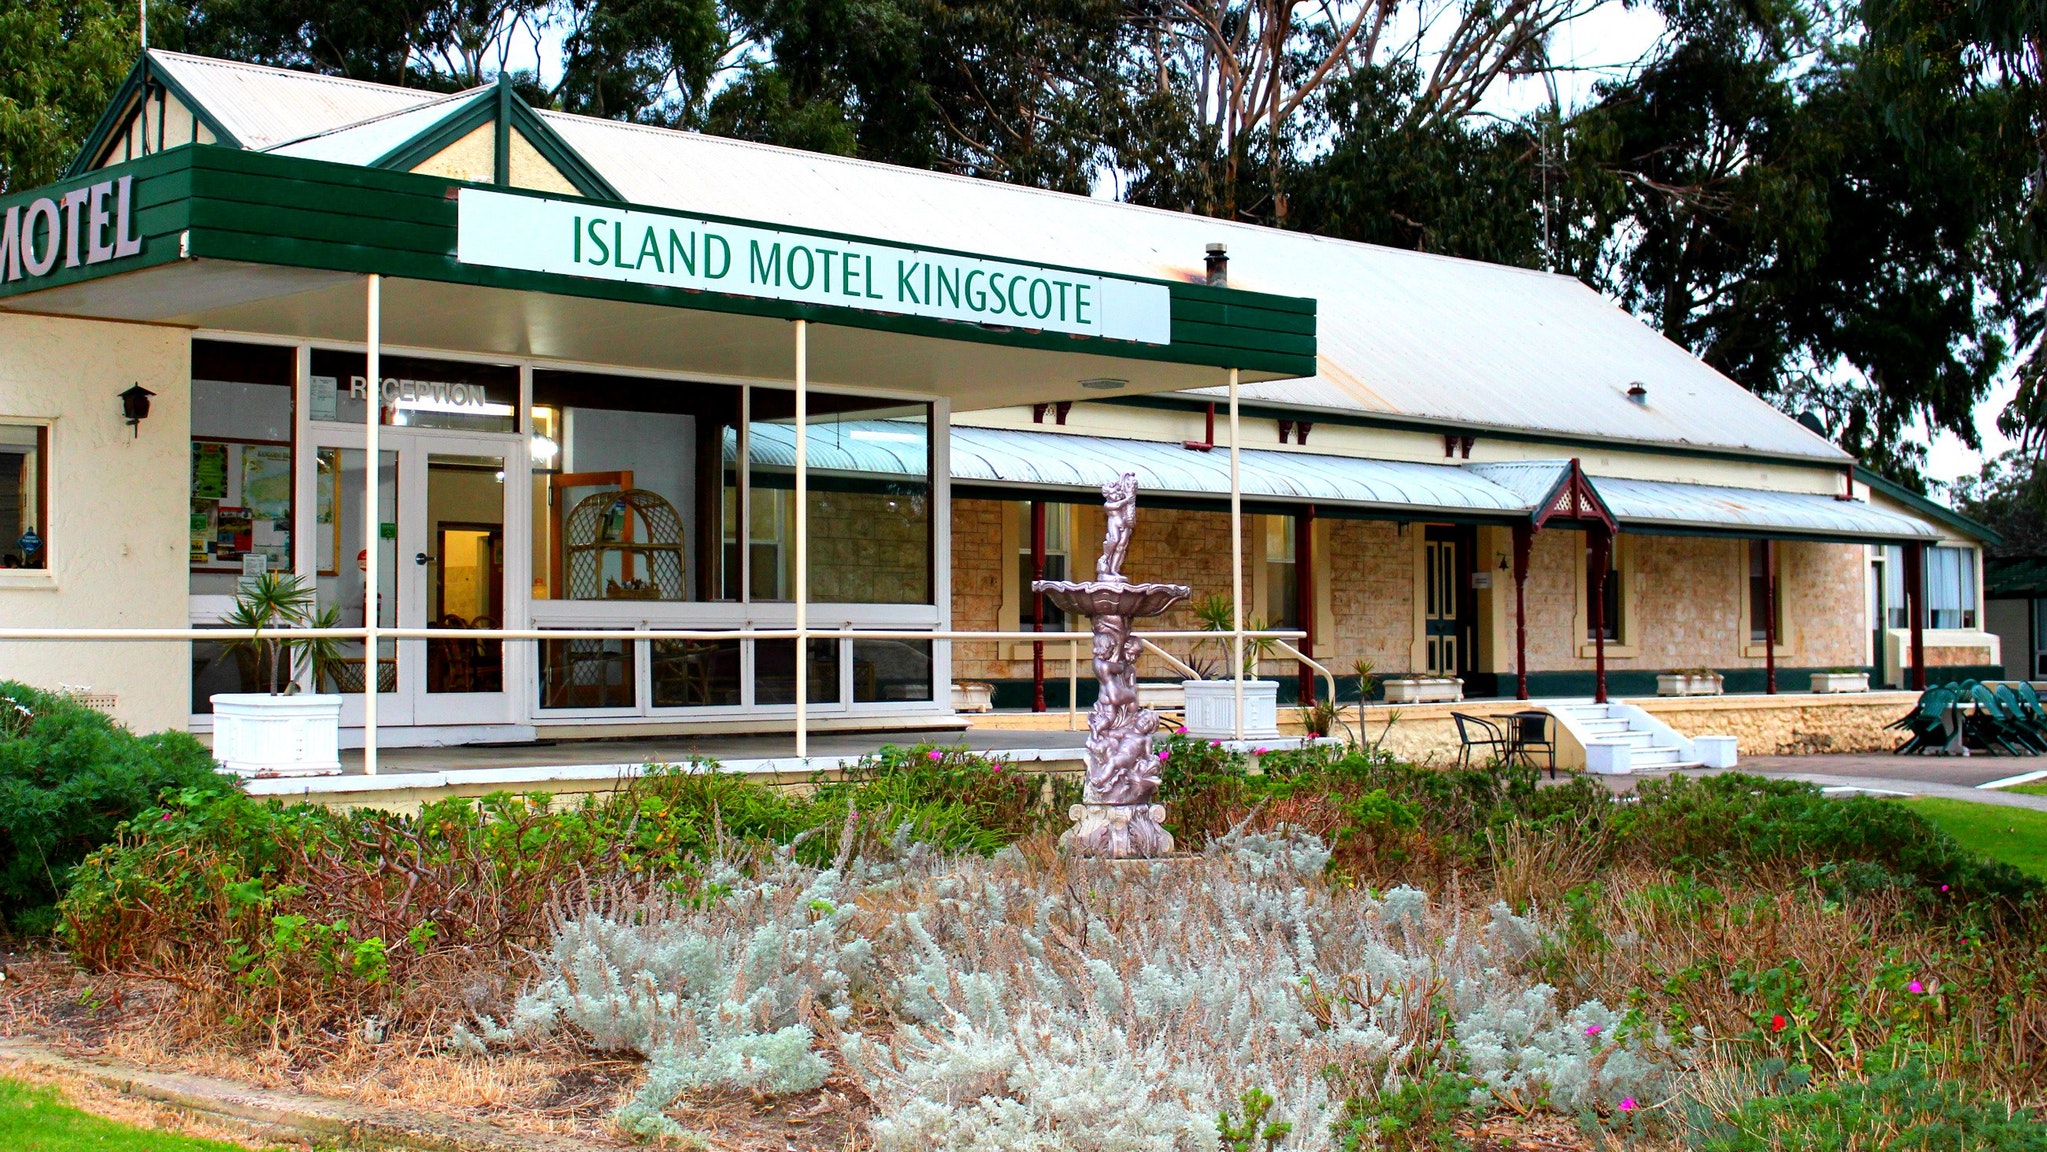 Island Motel Kingscote - Accommodation Melbourne 5